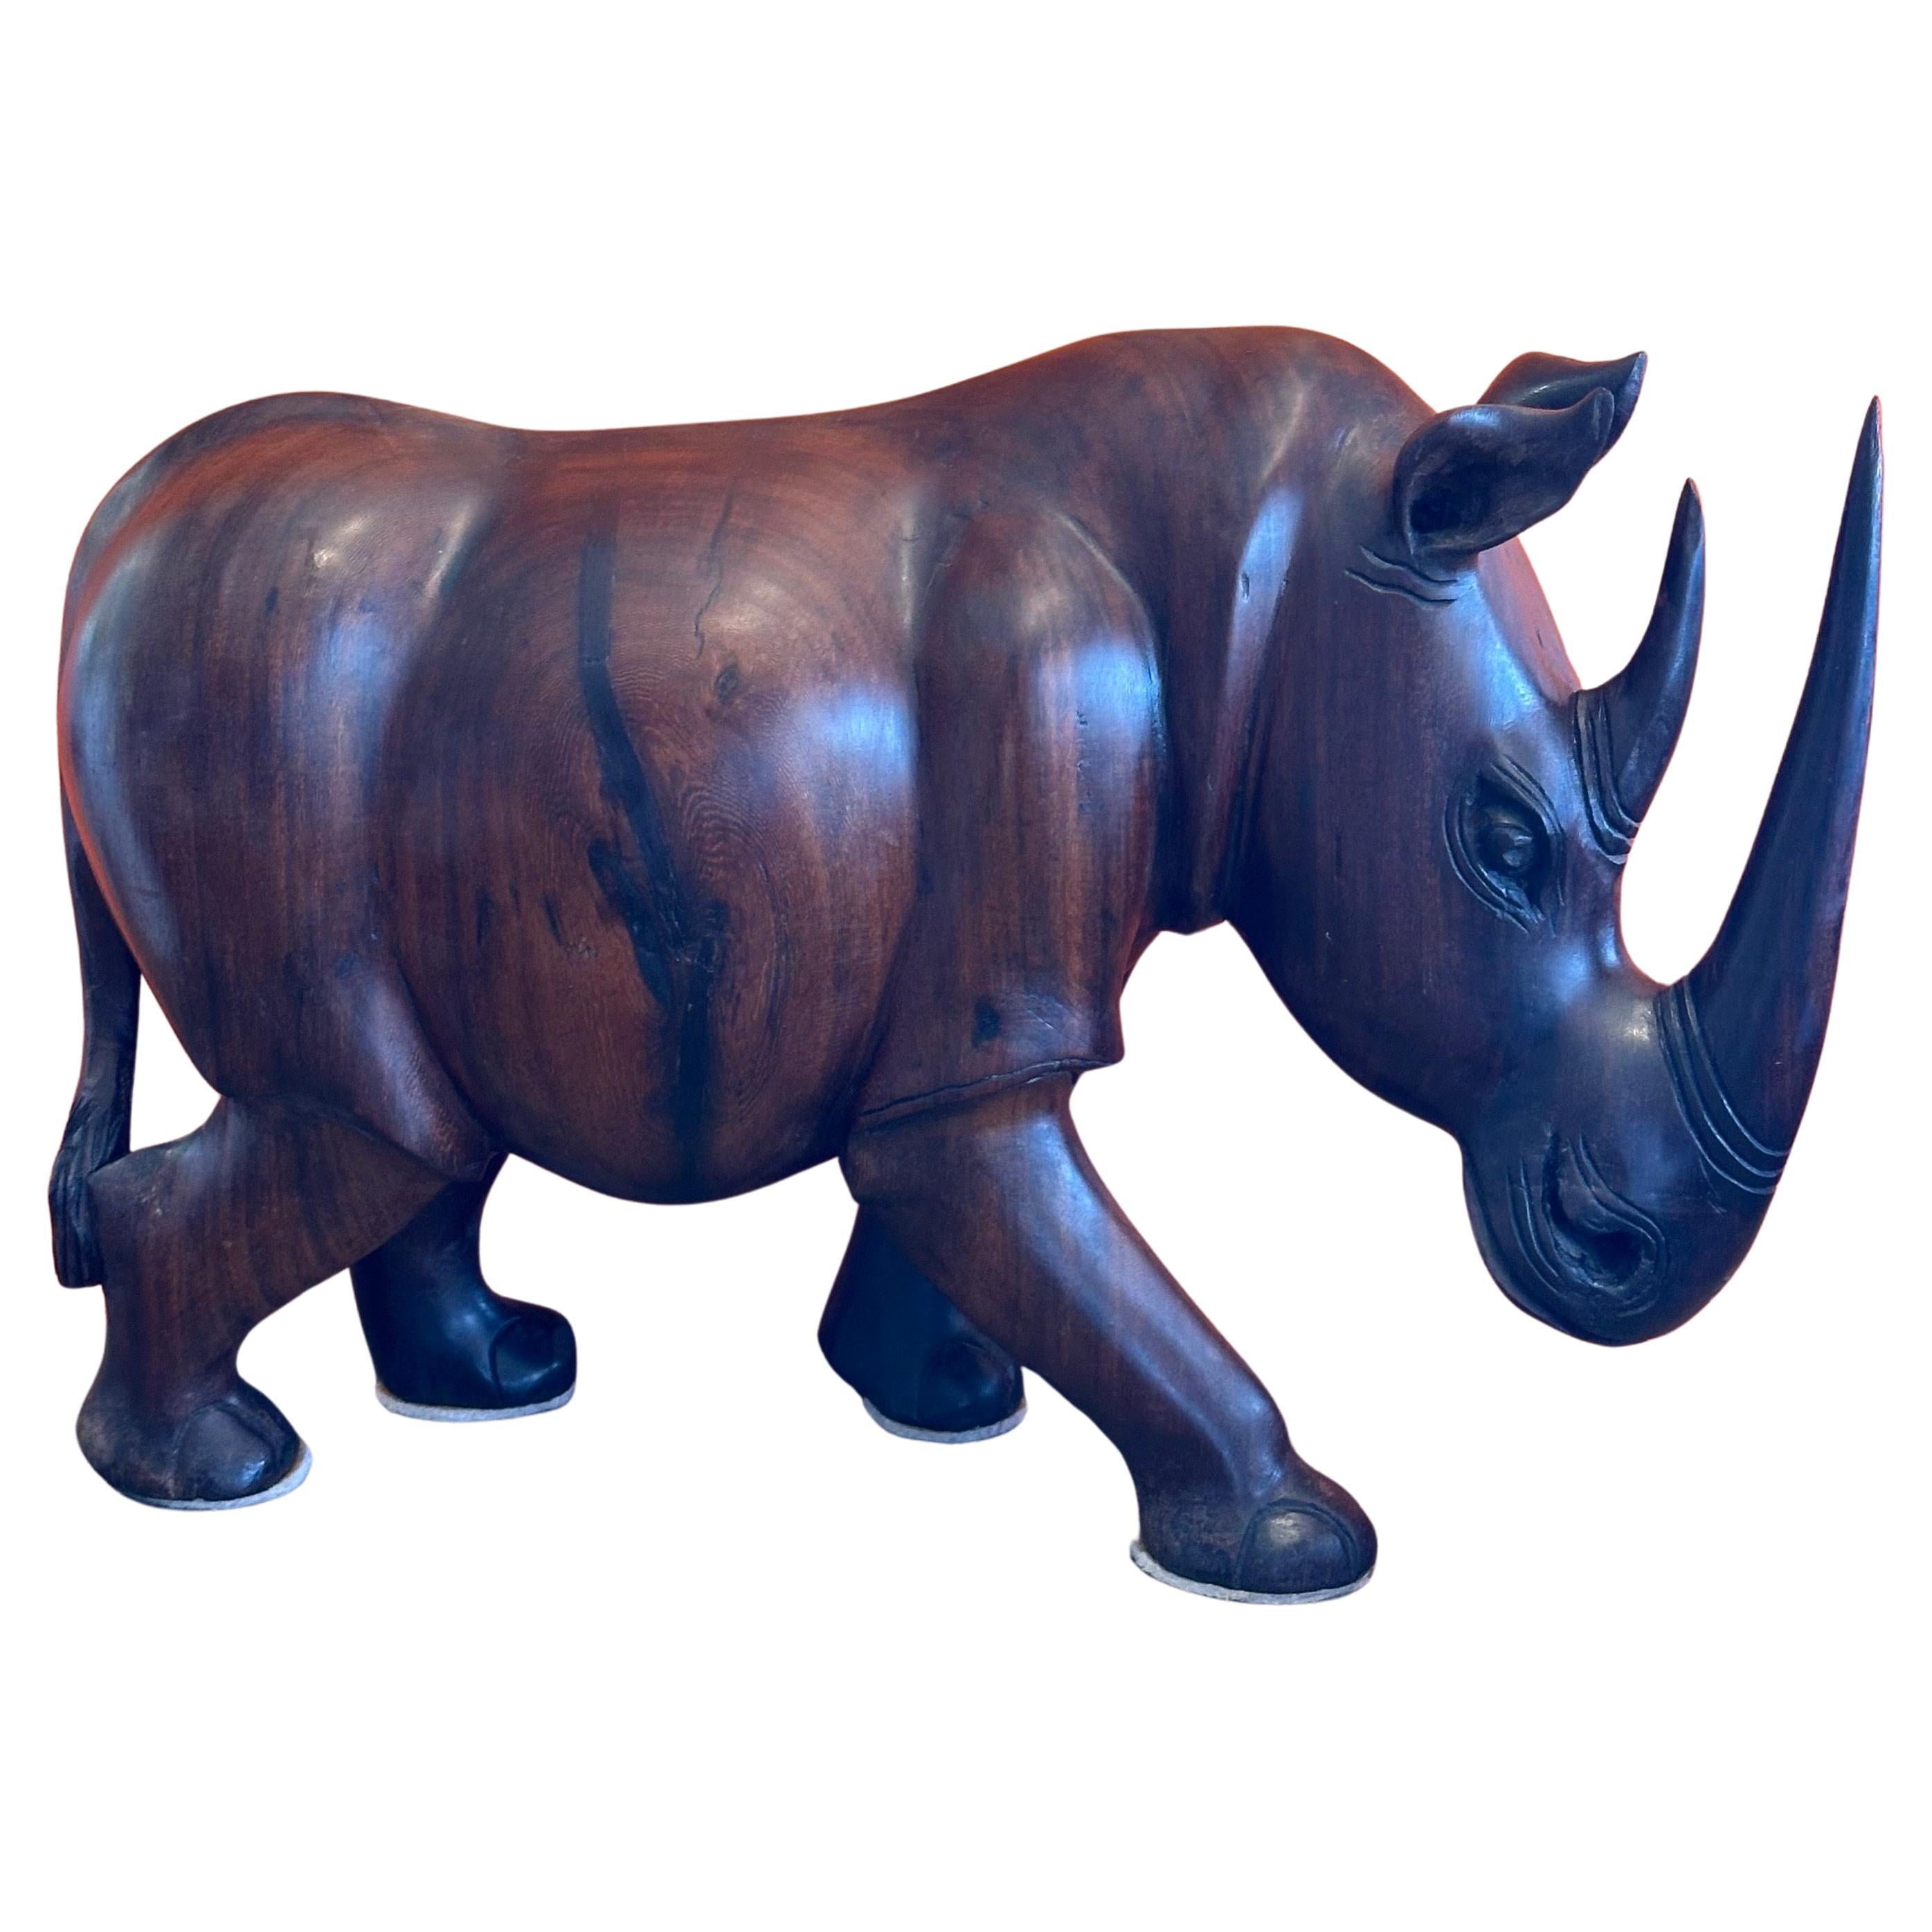 Massive Hand-Carved White Rhino / Rhinoceros Sculpture